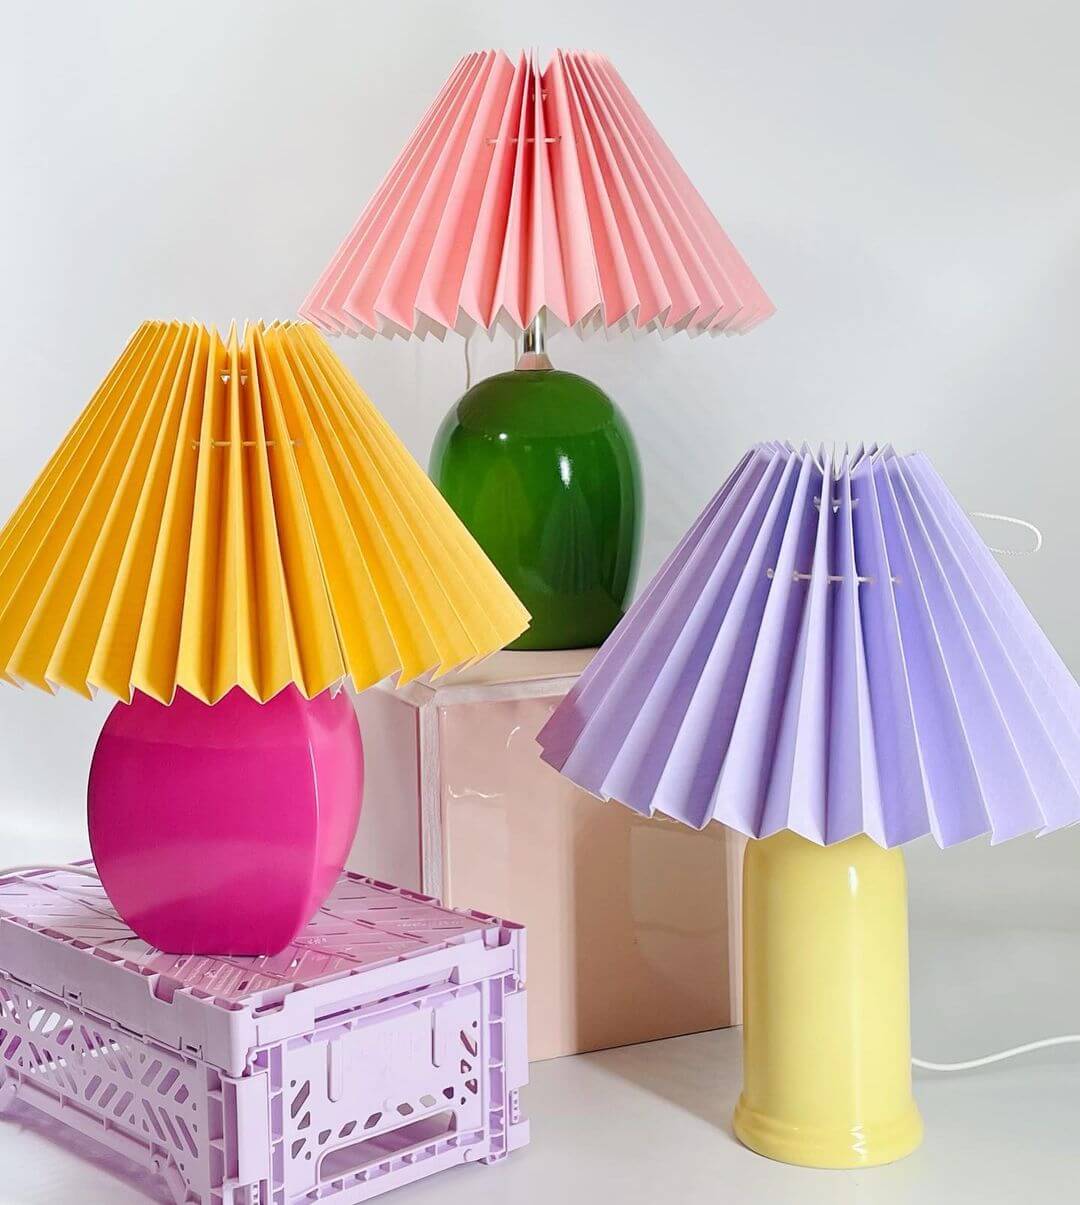 colorful vintage lighting by Interioer & Genbrug